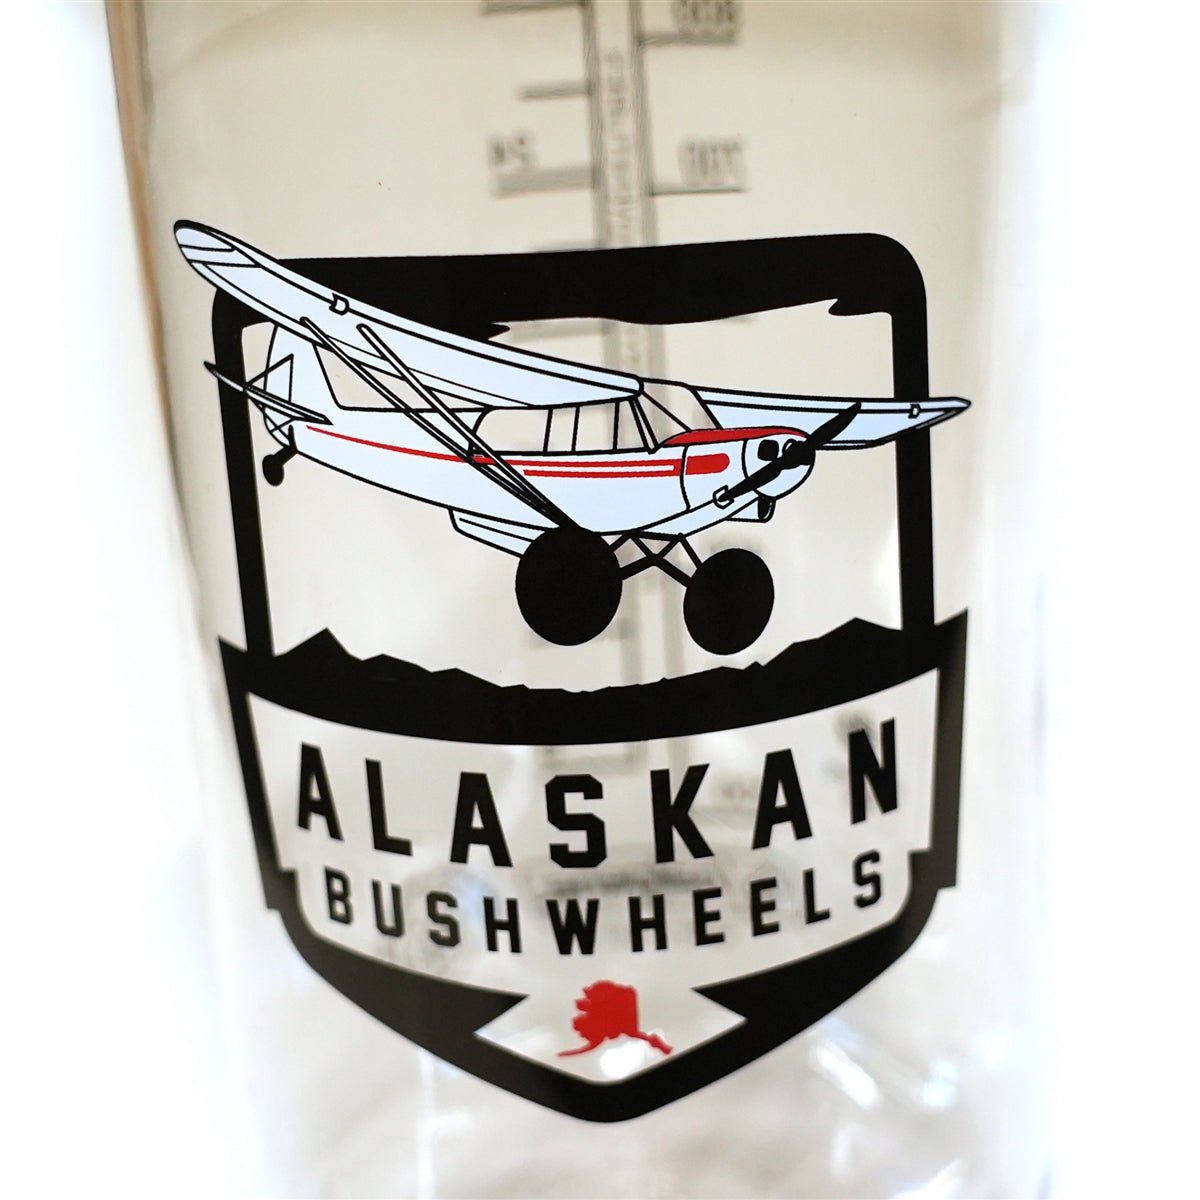 Alaska Gear Company Alaskan Bushwheels Nalgene - NALGENE PIPER